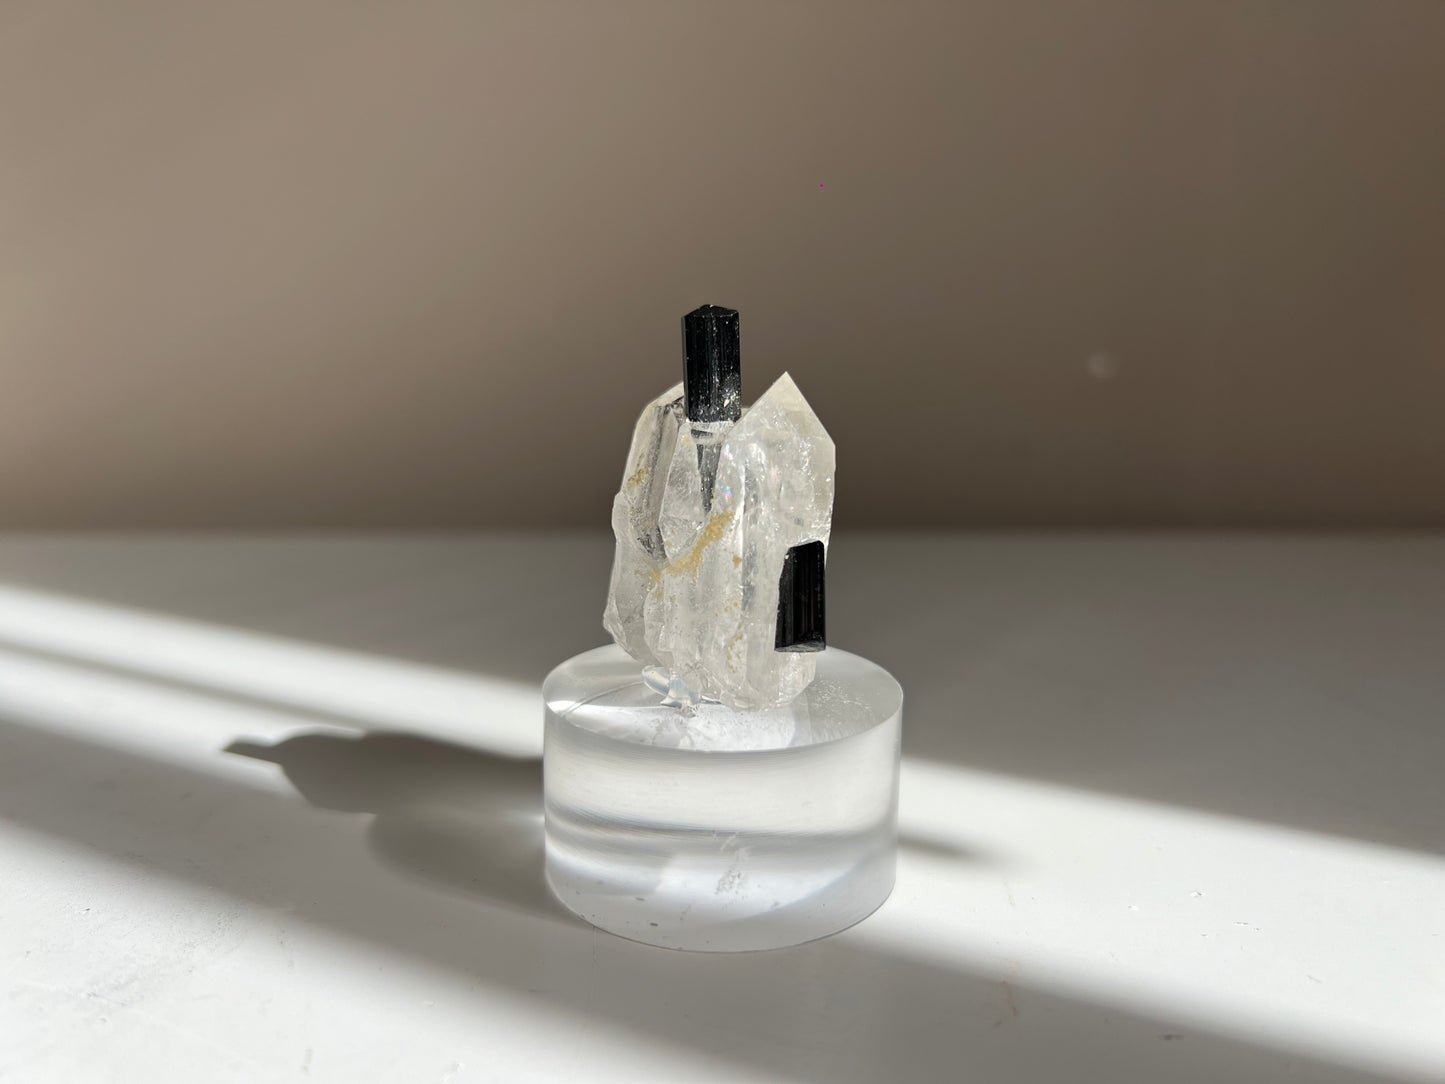 Bergkristal, collectors item